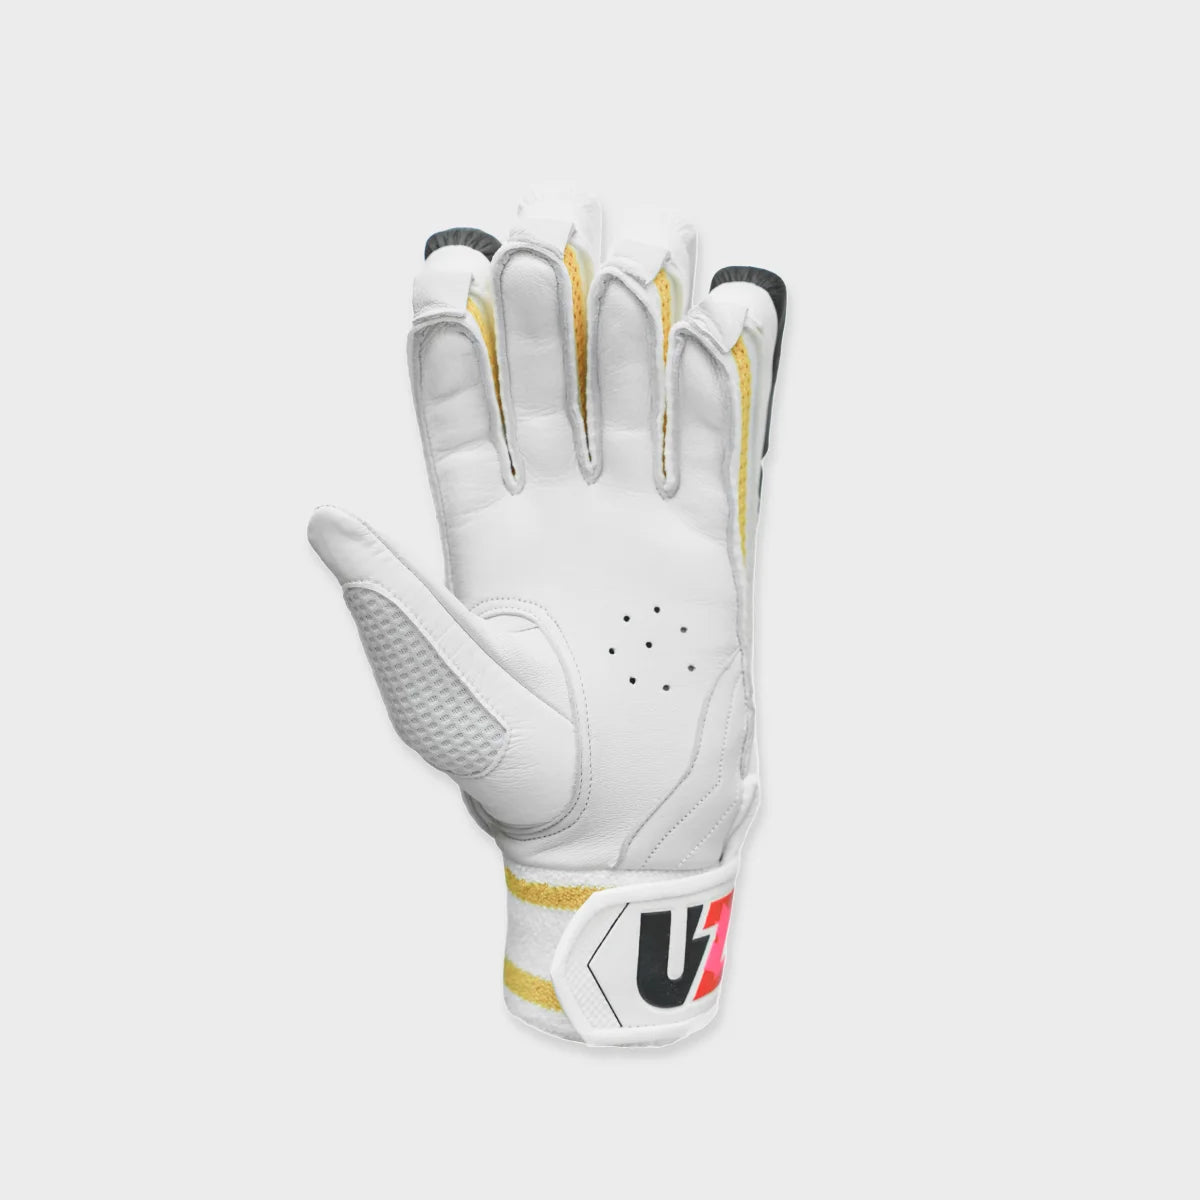 UZ Maple Batting Gloves